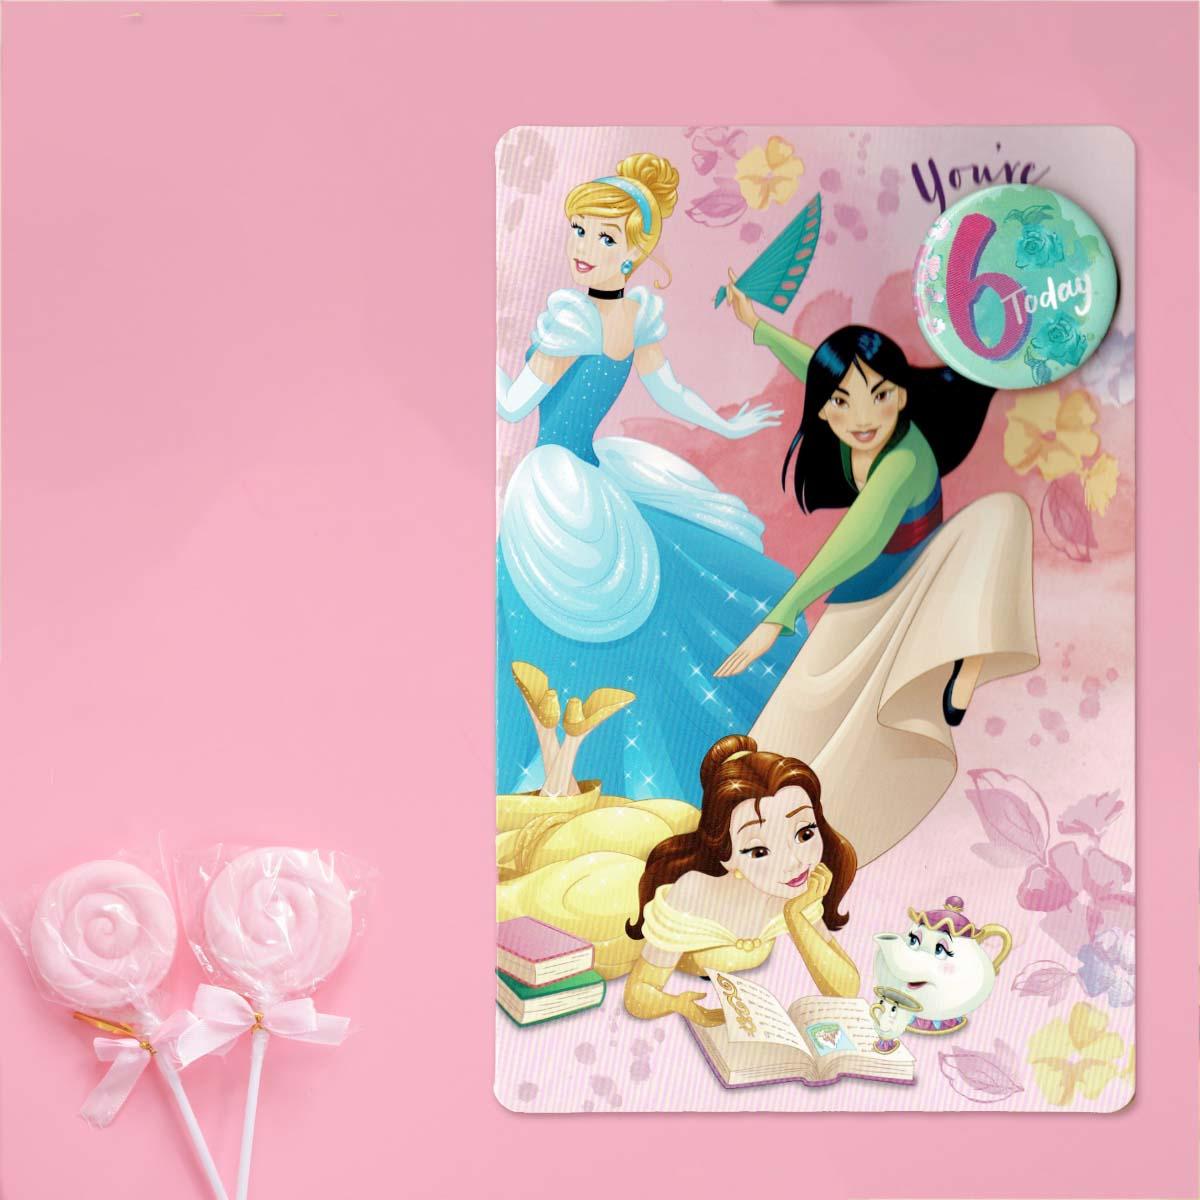 Disney Princess Badge 6 Today Card Front Image